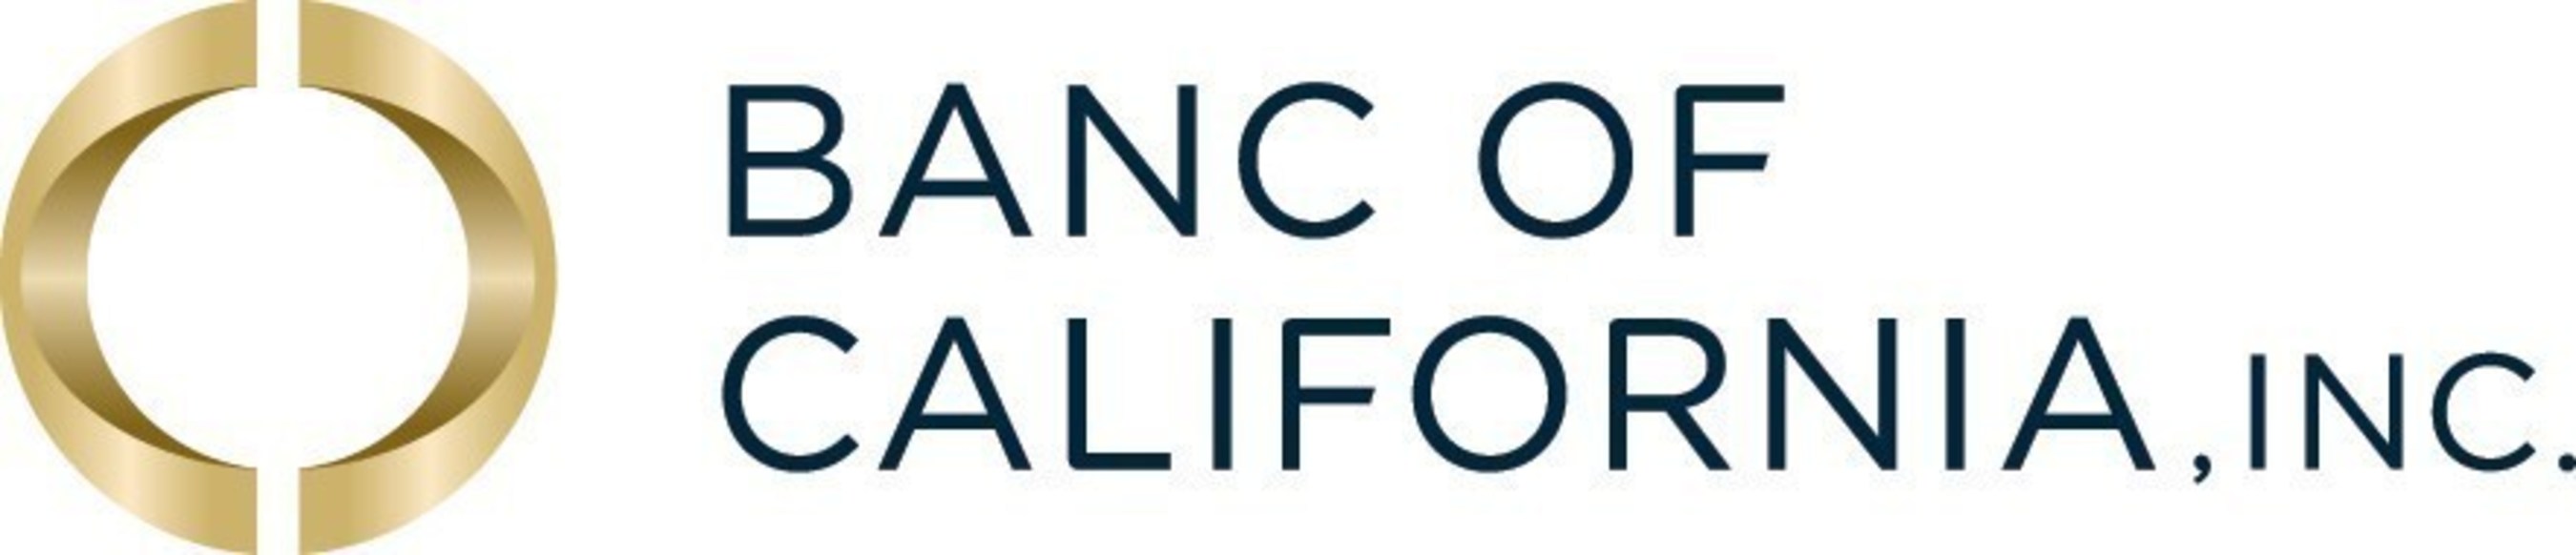 Banc of California Logo. (PRNewsFoto/Banc of California) (PRNewsFoto/Banc of California) (PRNewsFoto/Banc of California)